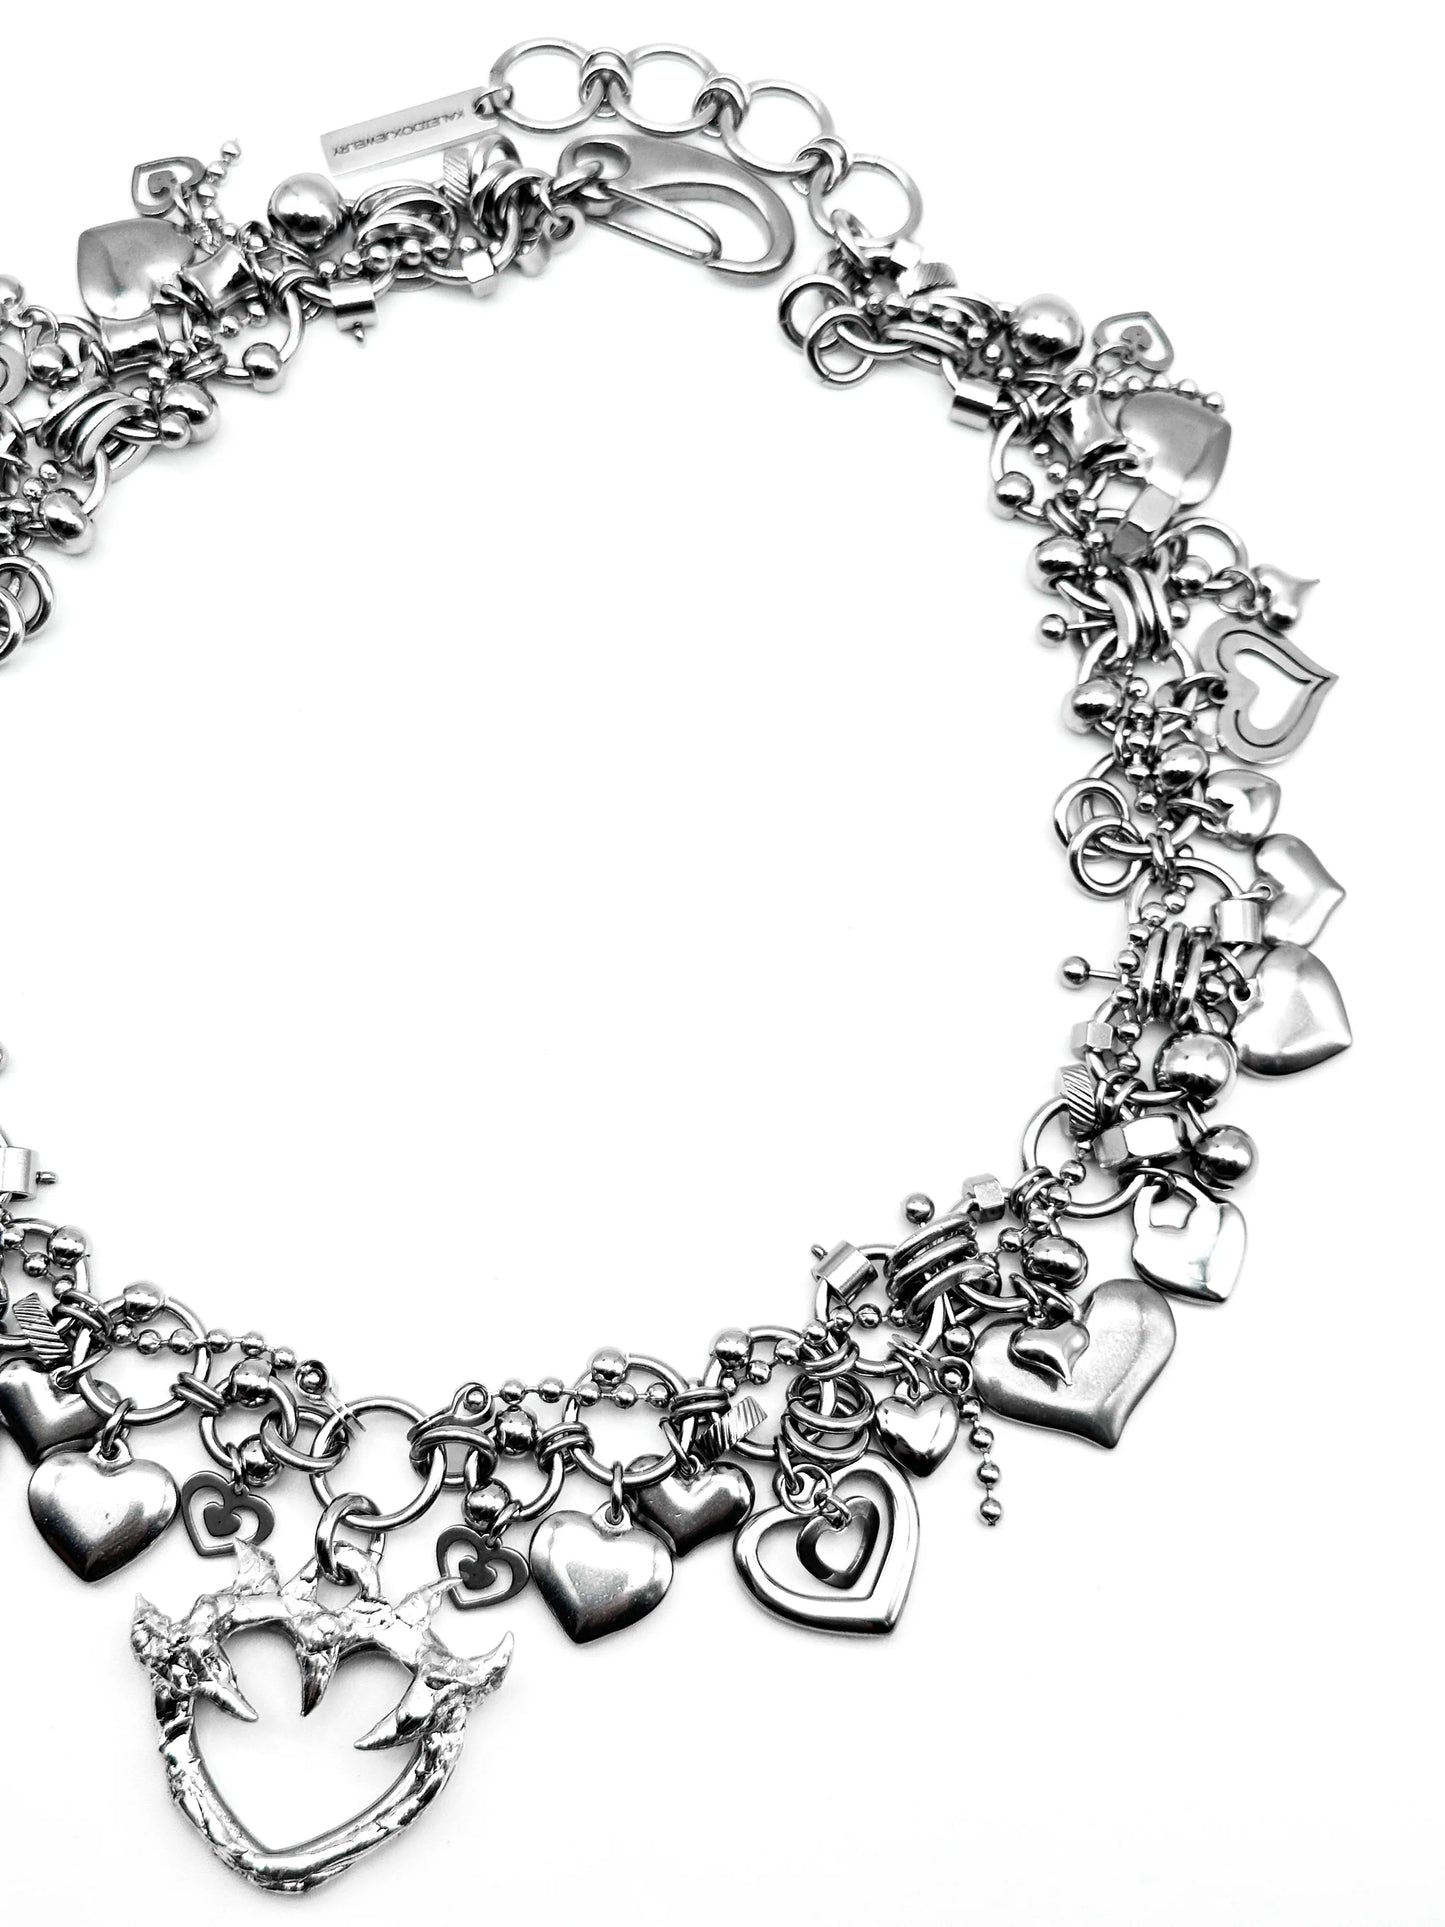 Soldered heart & hearts drop piercings necklace